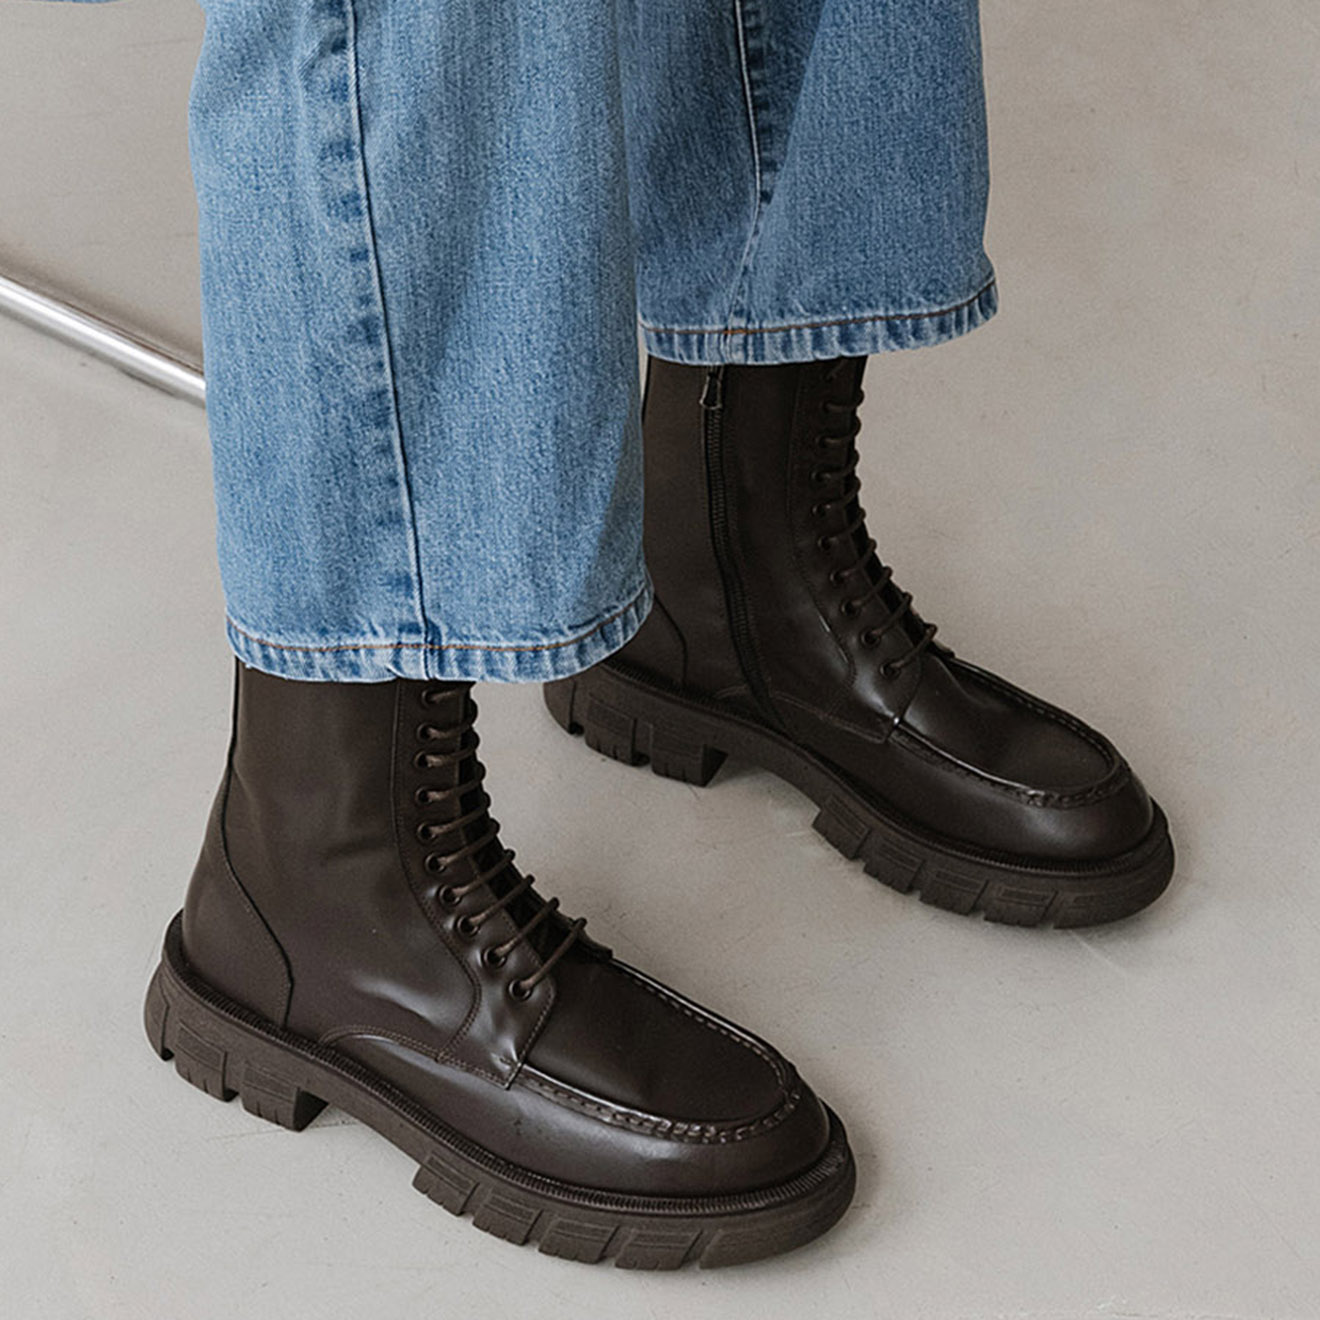 jonak - boots en cuir rumilo marron - talon 4.5 cm